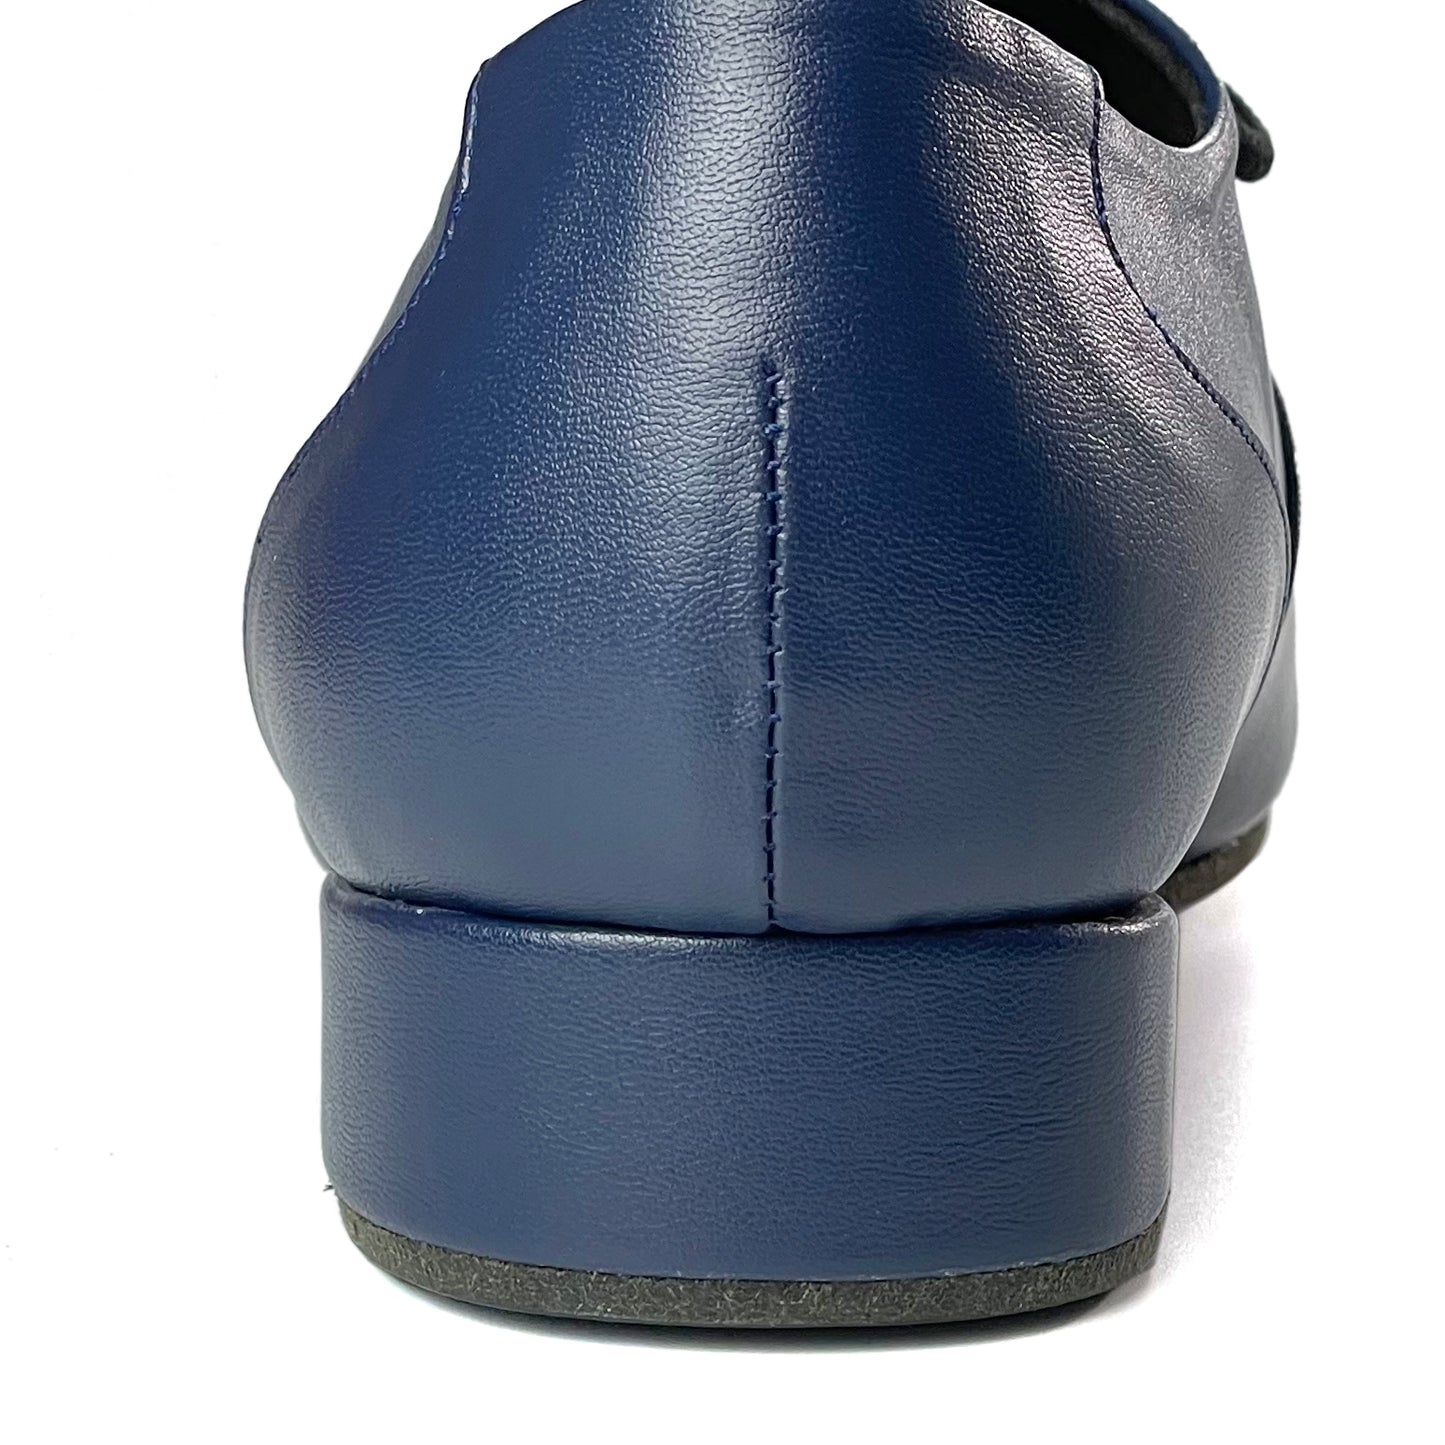 Pro Dancer Men's Argentine Tango Shoes Leather Sole 1 inch Heel Lace-up Blue (PD-1004C)